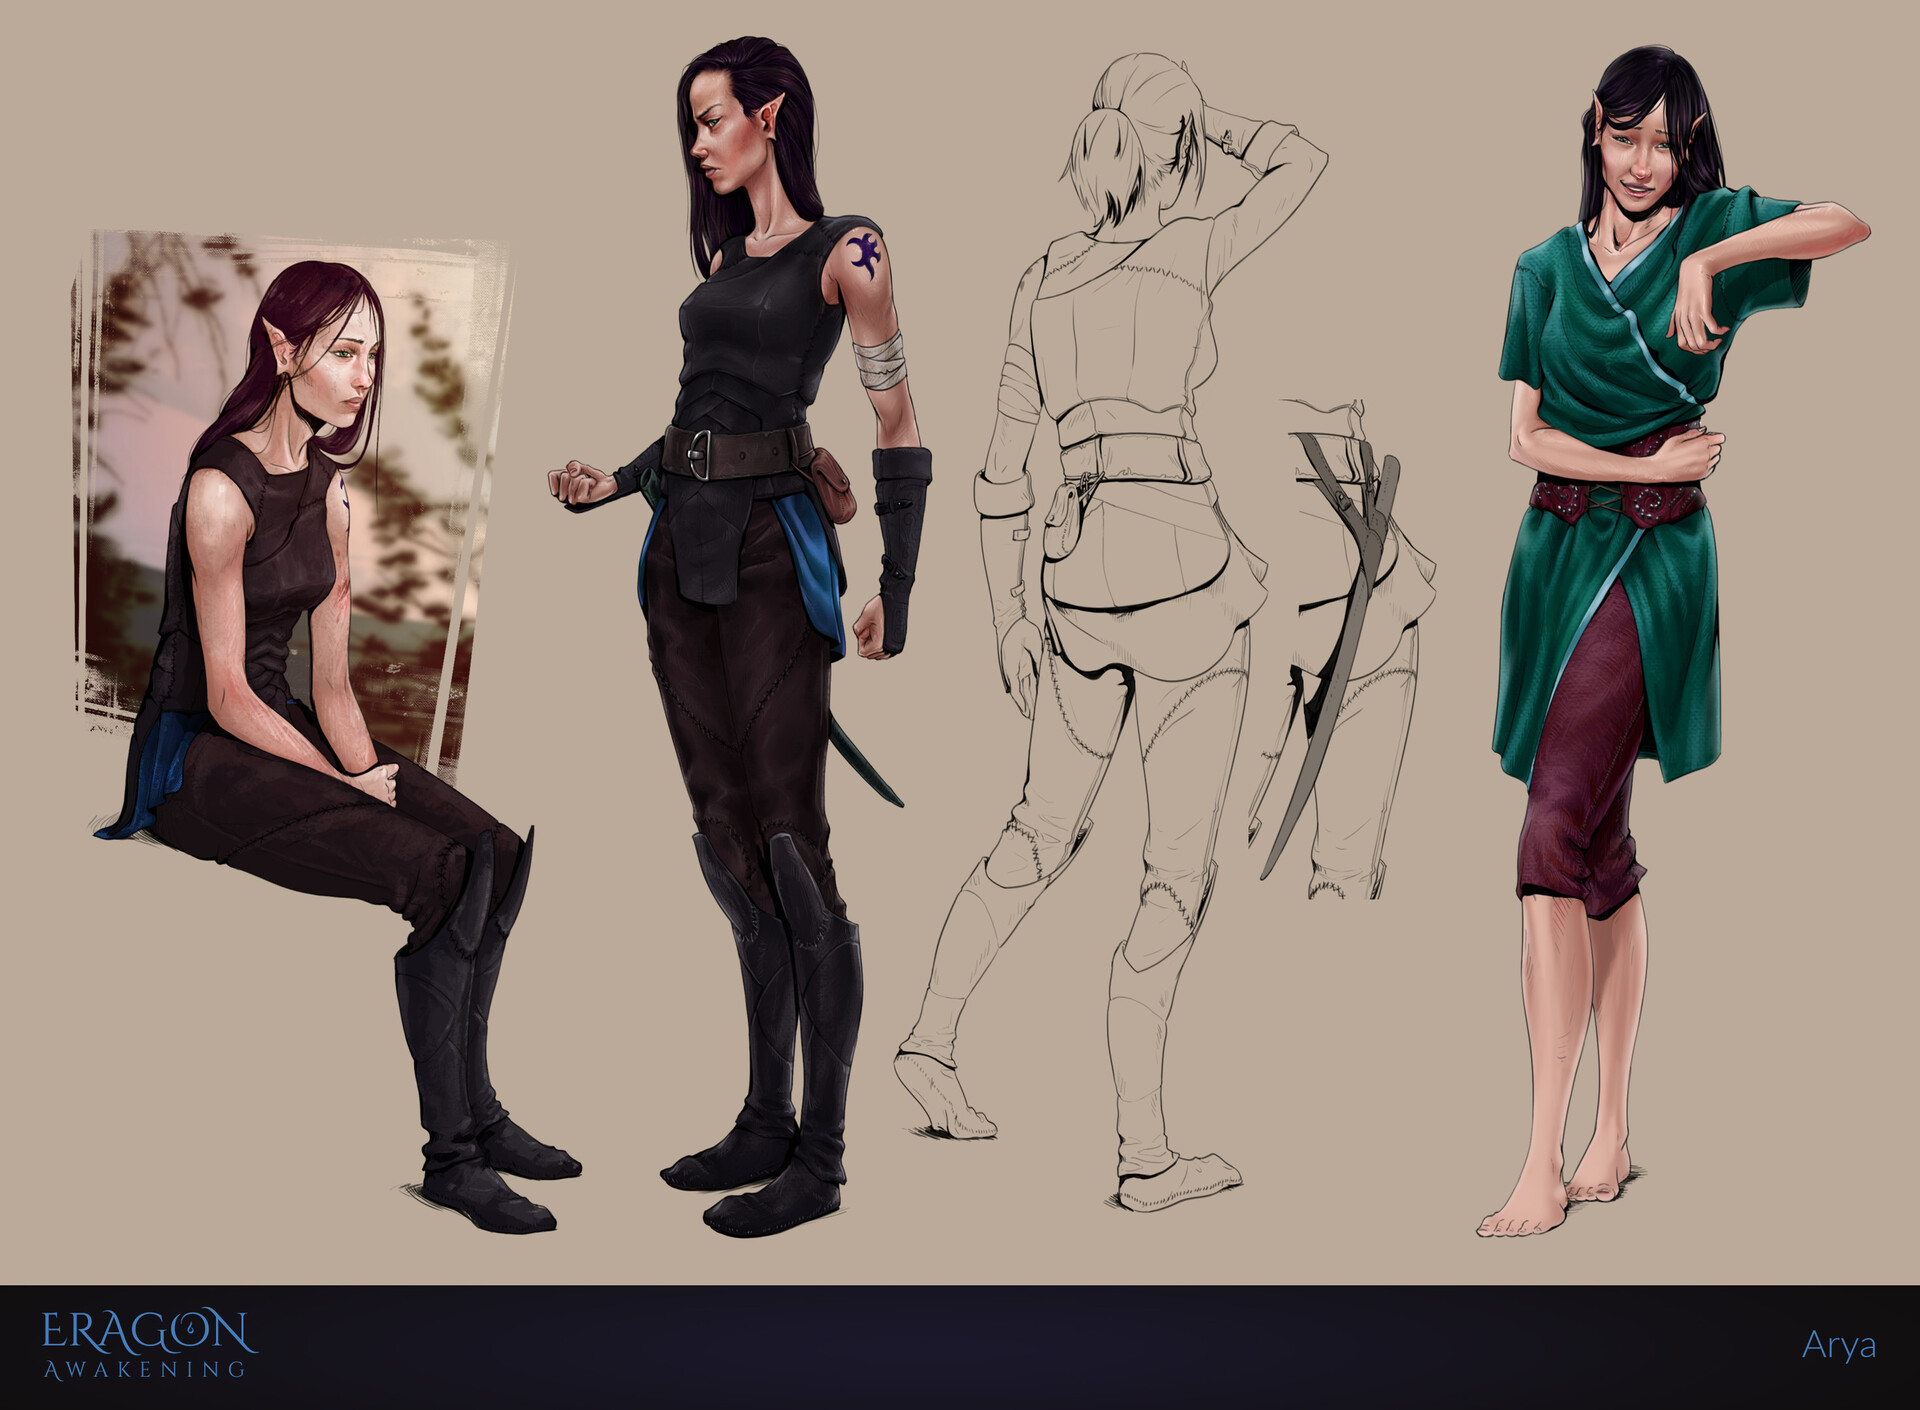 Main Character Concepts - Eragon Awakening Project.